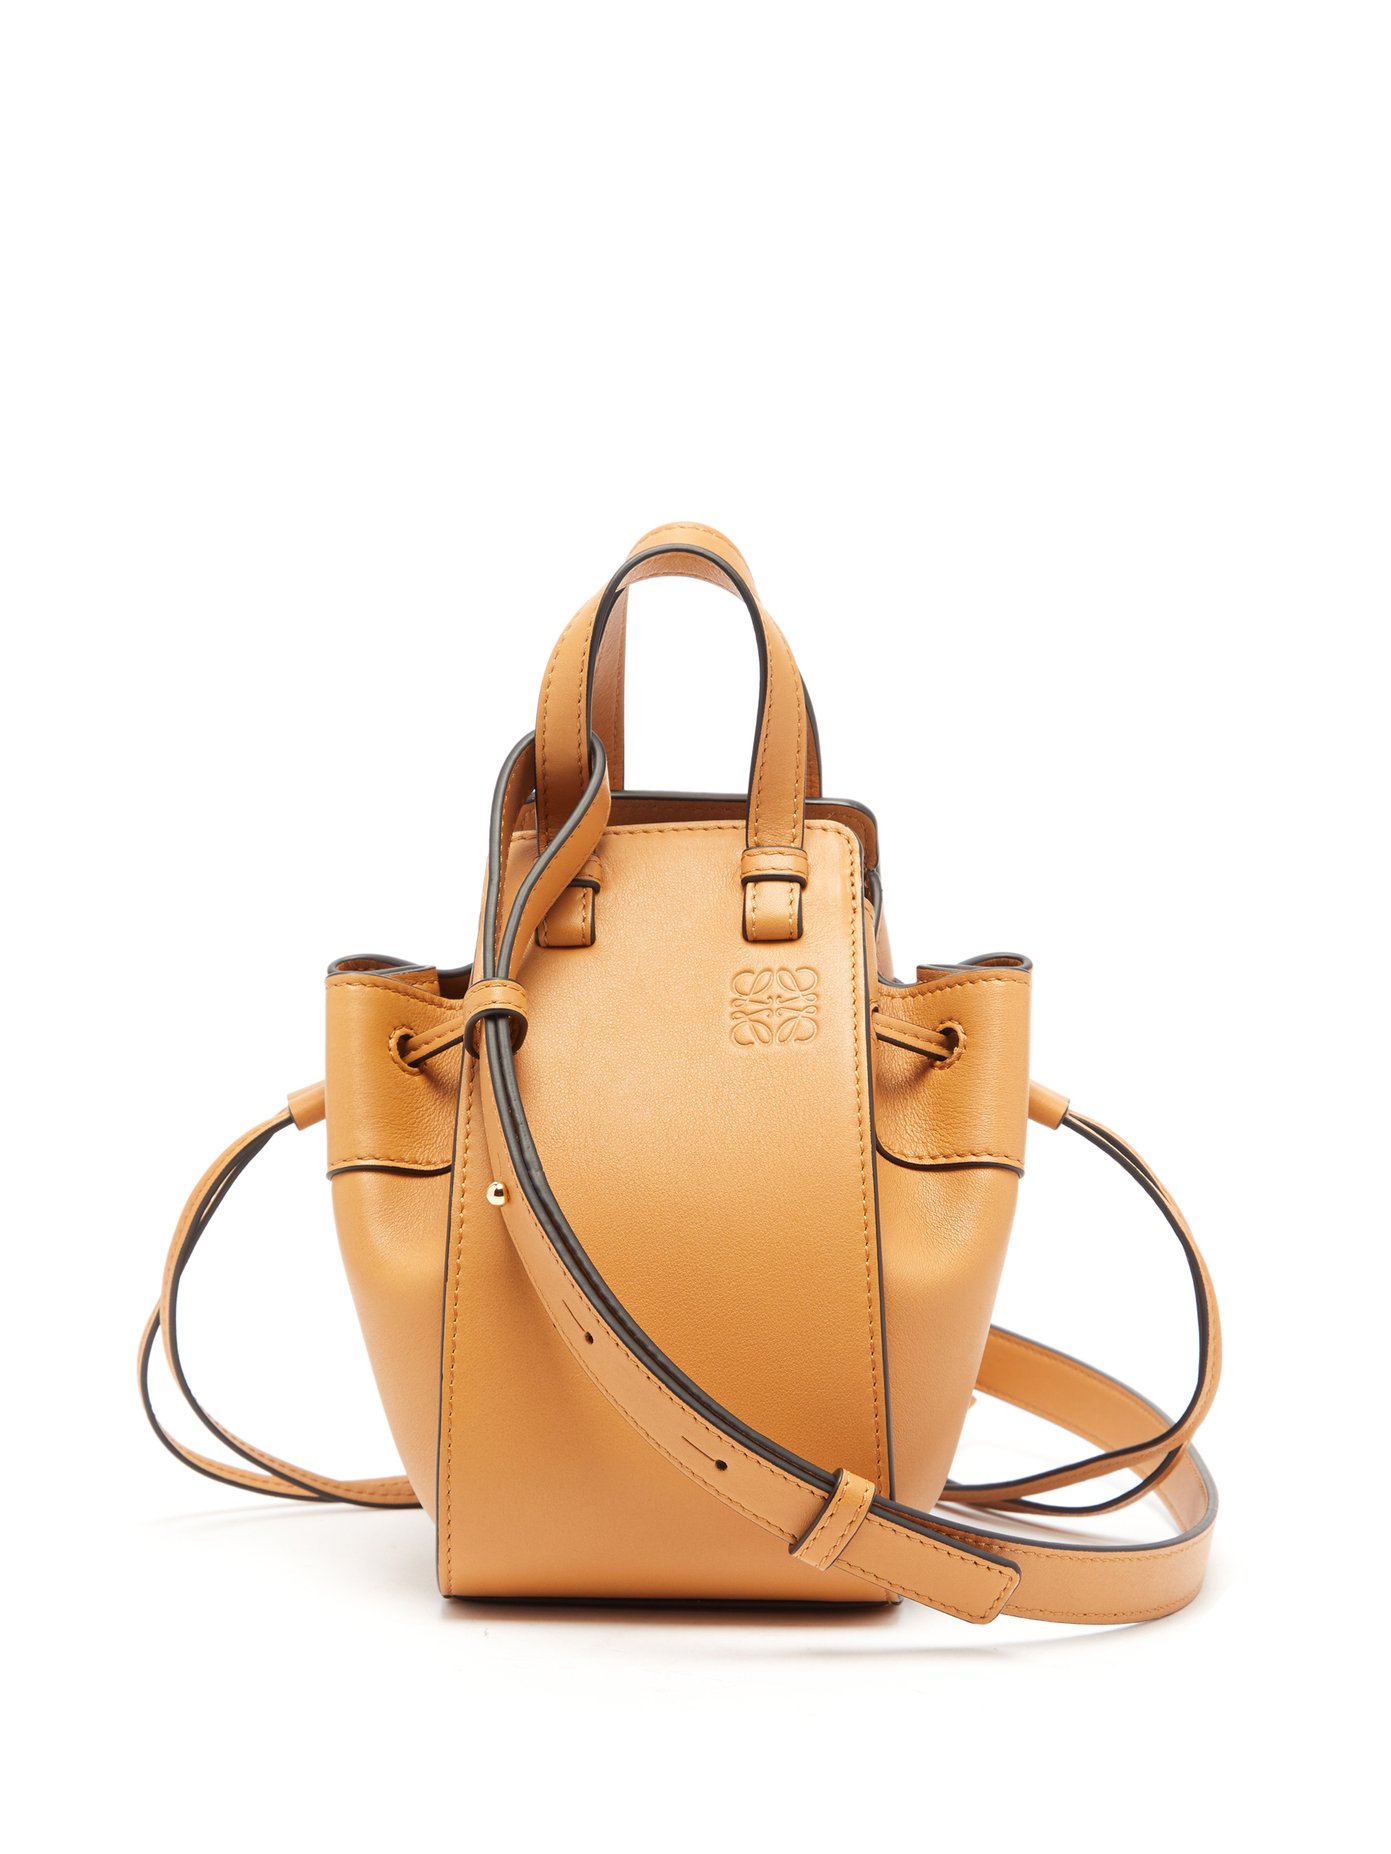 Hammock mini leather tote bag | Loewe 